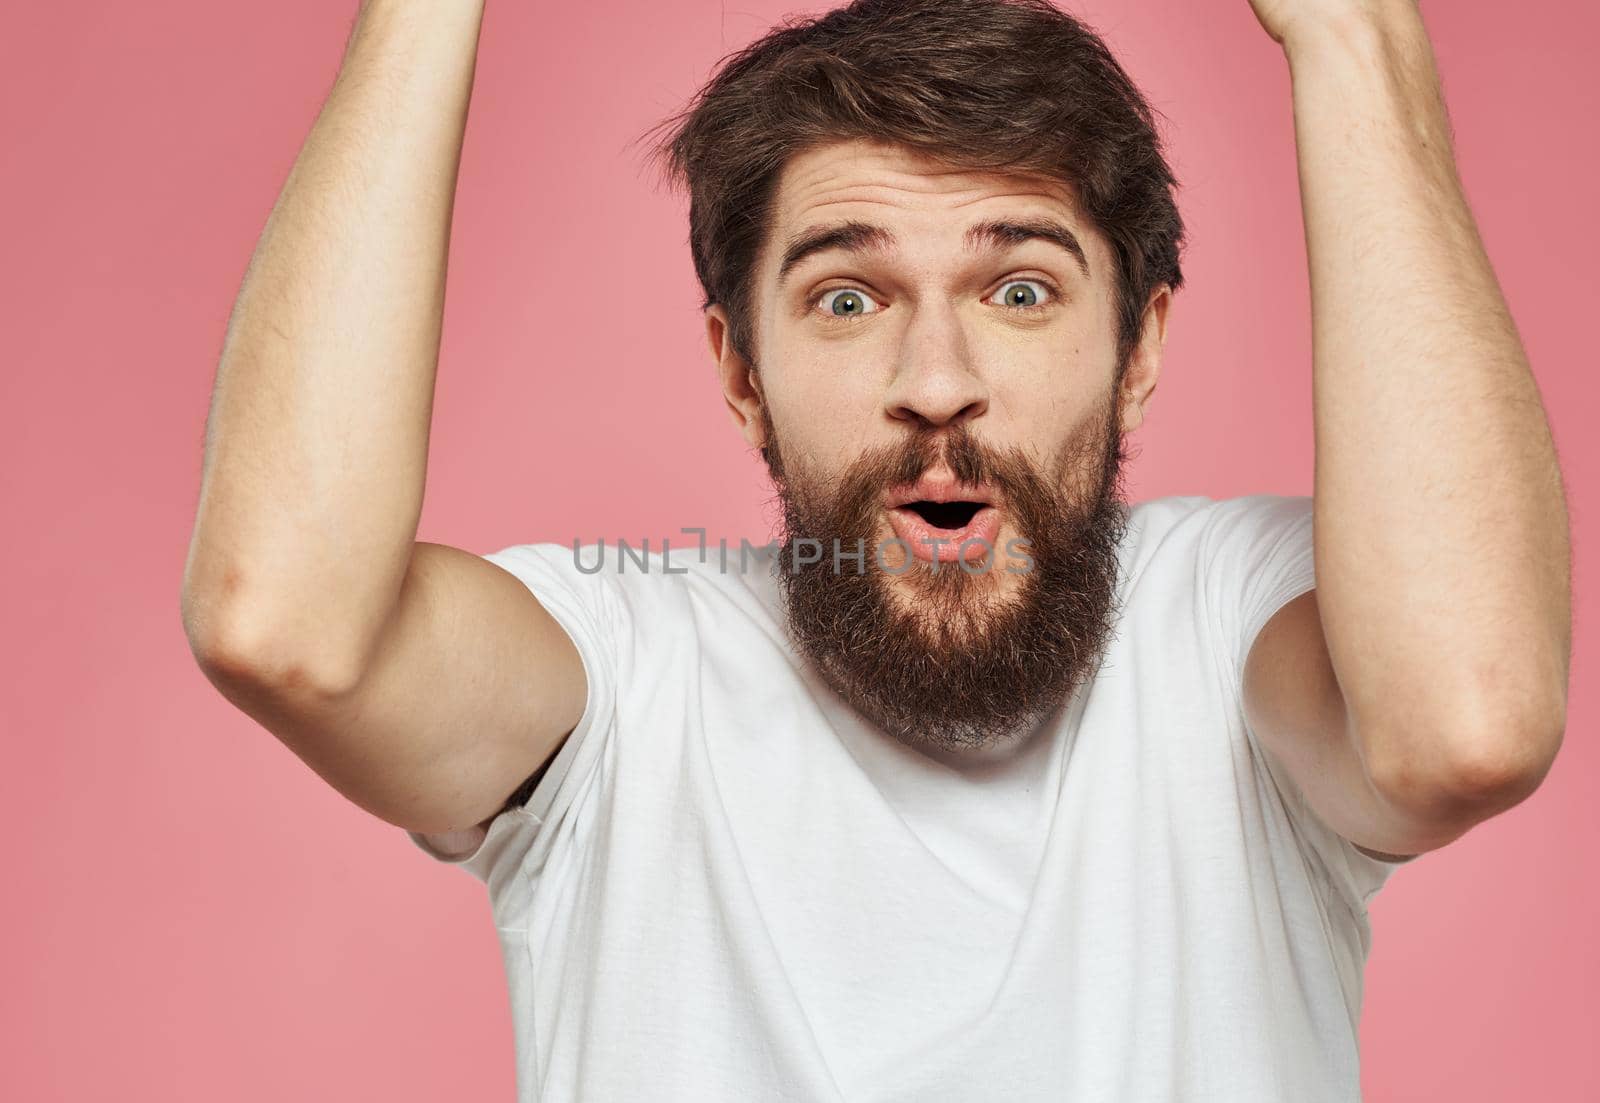 Portrait of happy man with bushy beard emotions model pink background by SHOTPRIME